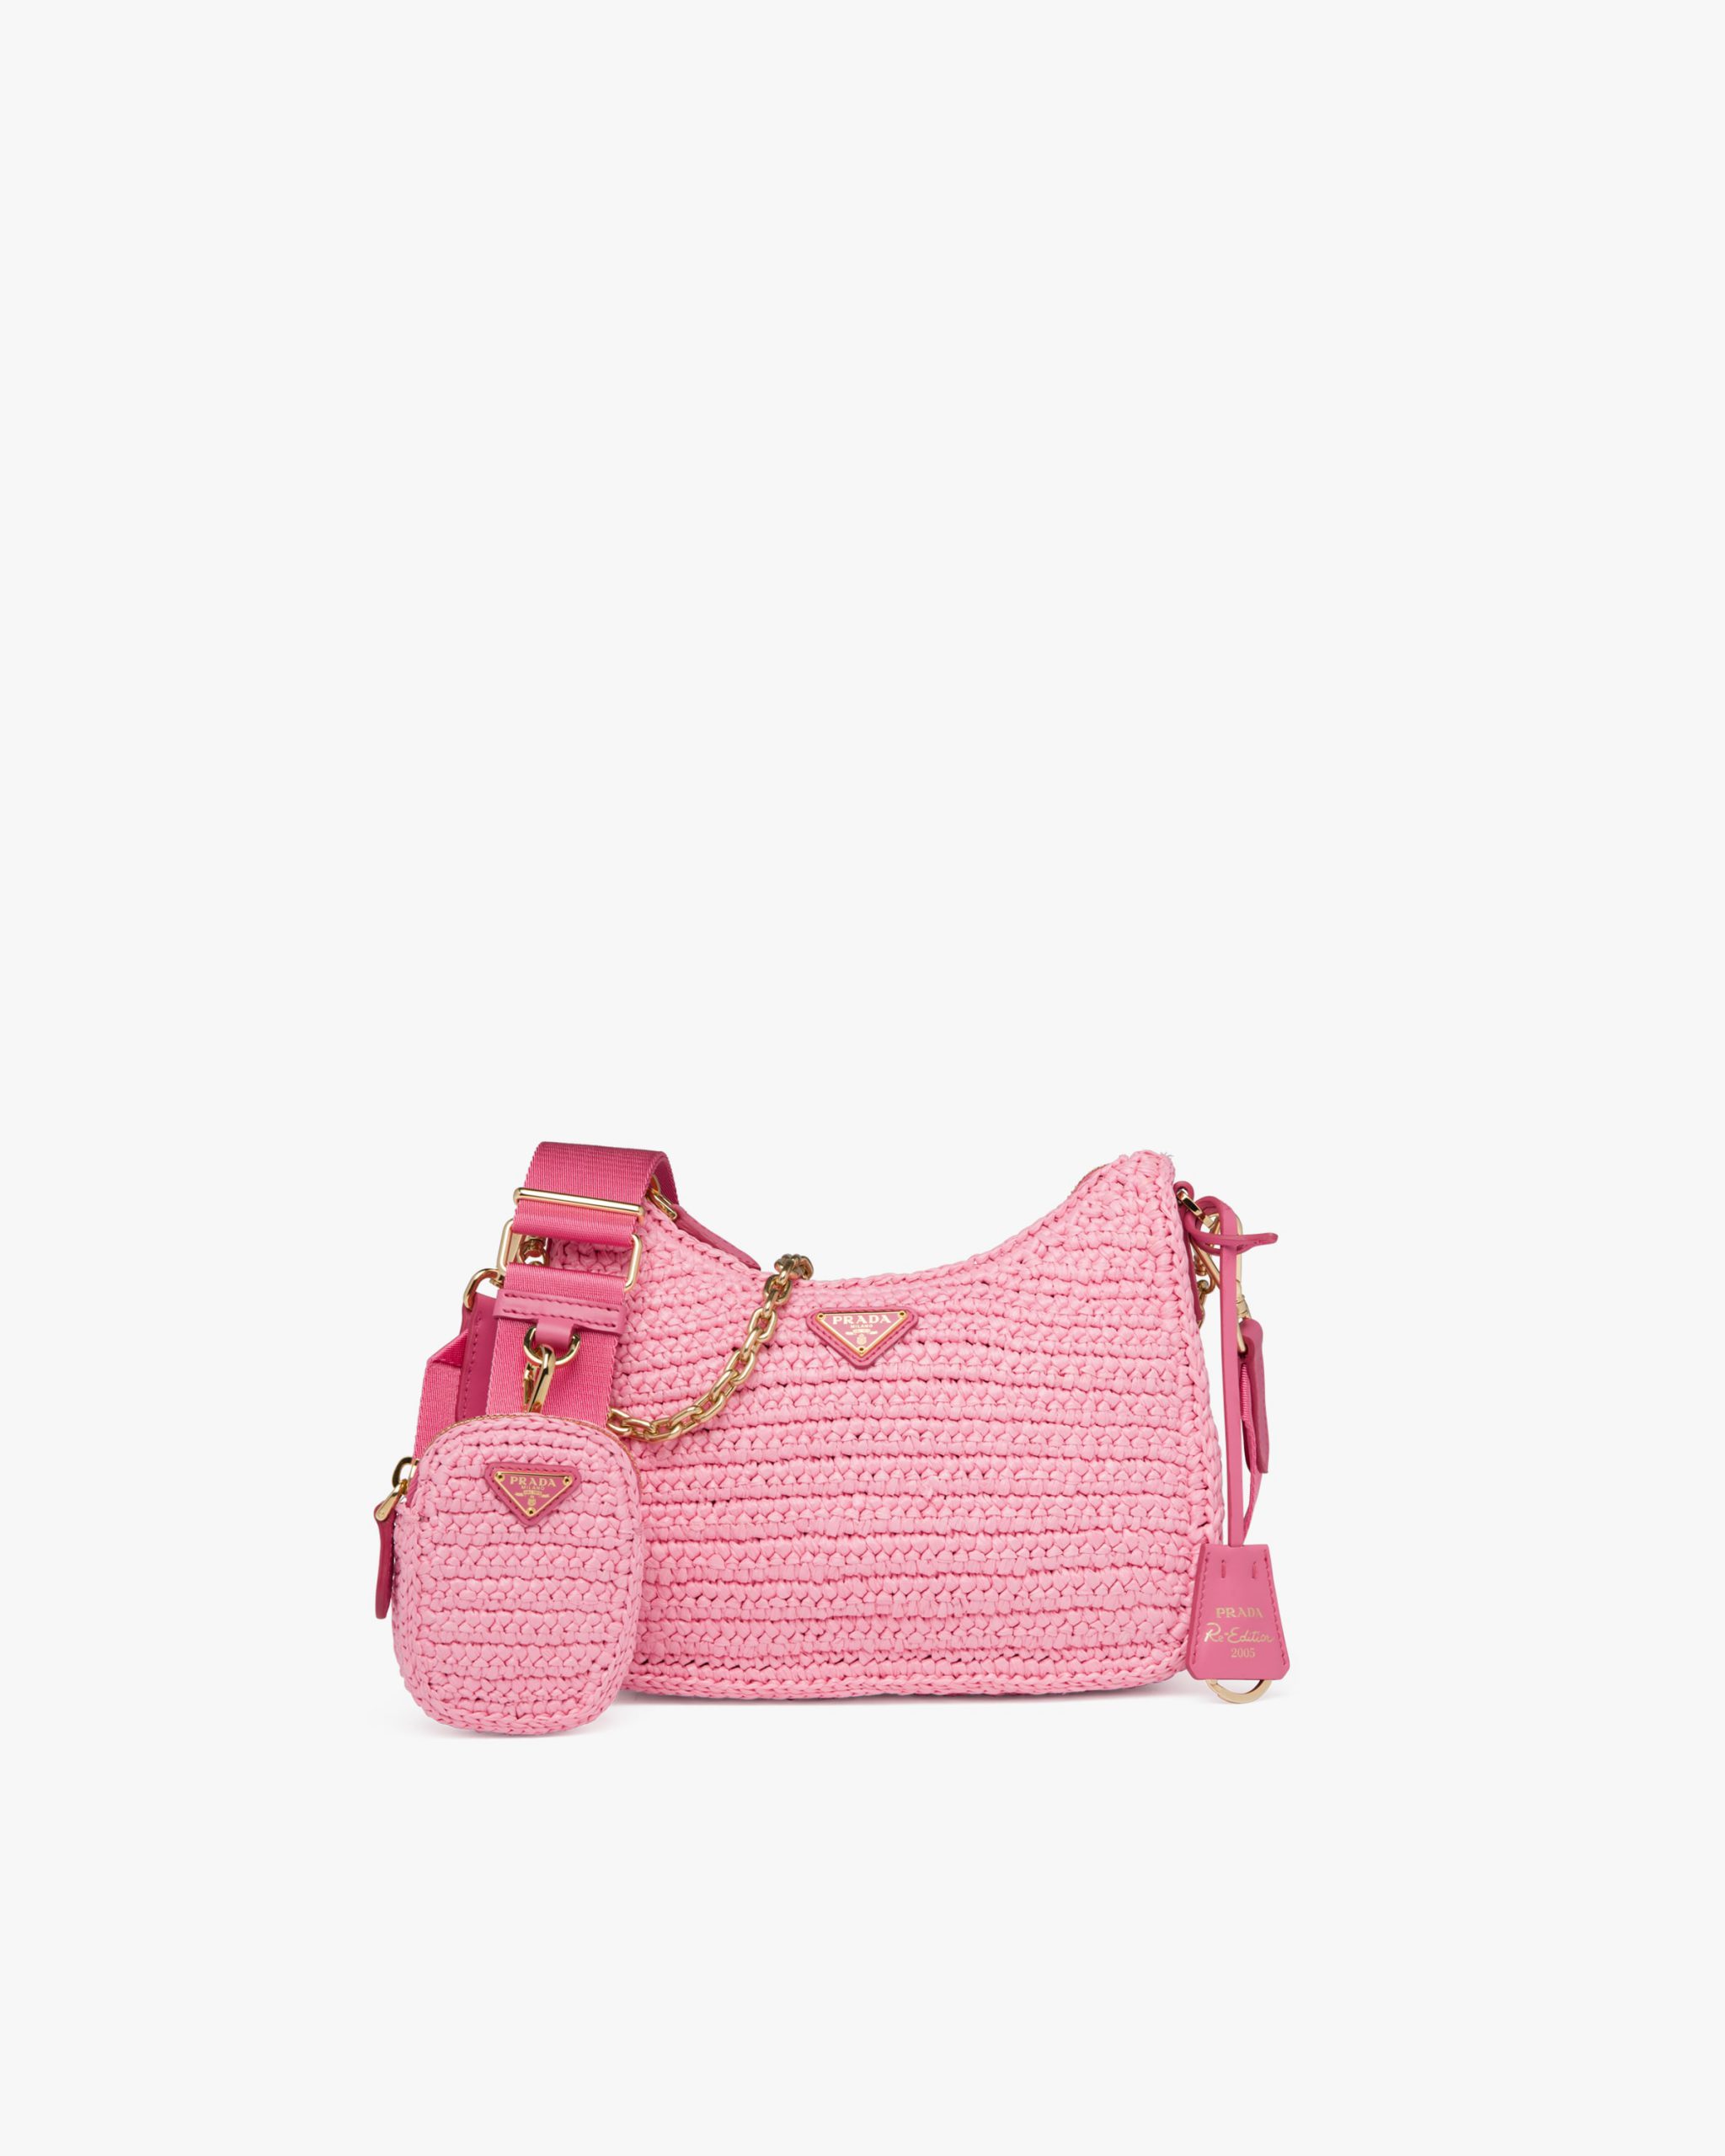 Petal Pink Prada Re-edition 2005 Saffiano Leather Bag